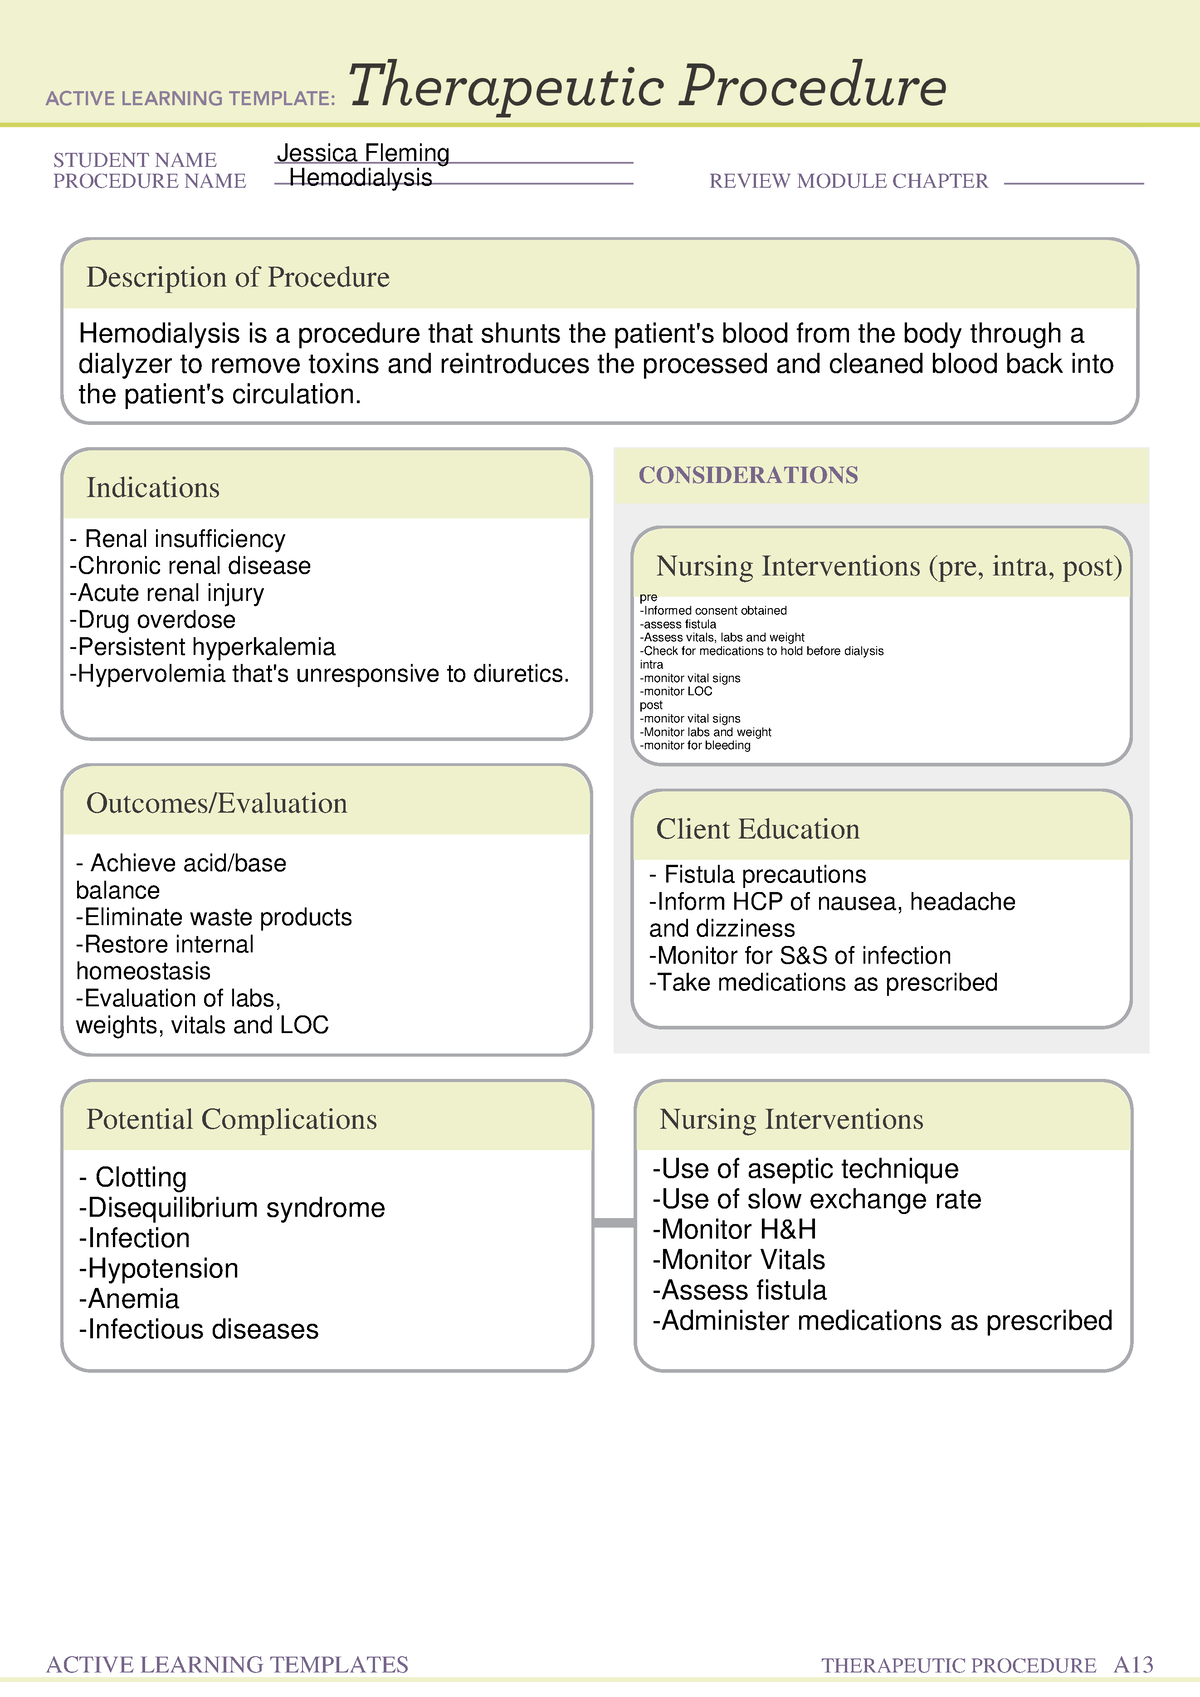 ATI Active learning template Therapeutic Procedure Hemodialysis FN101